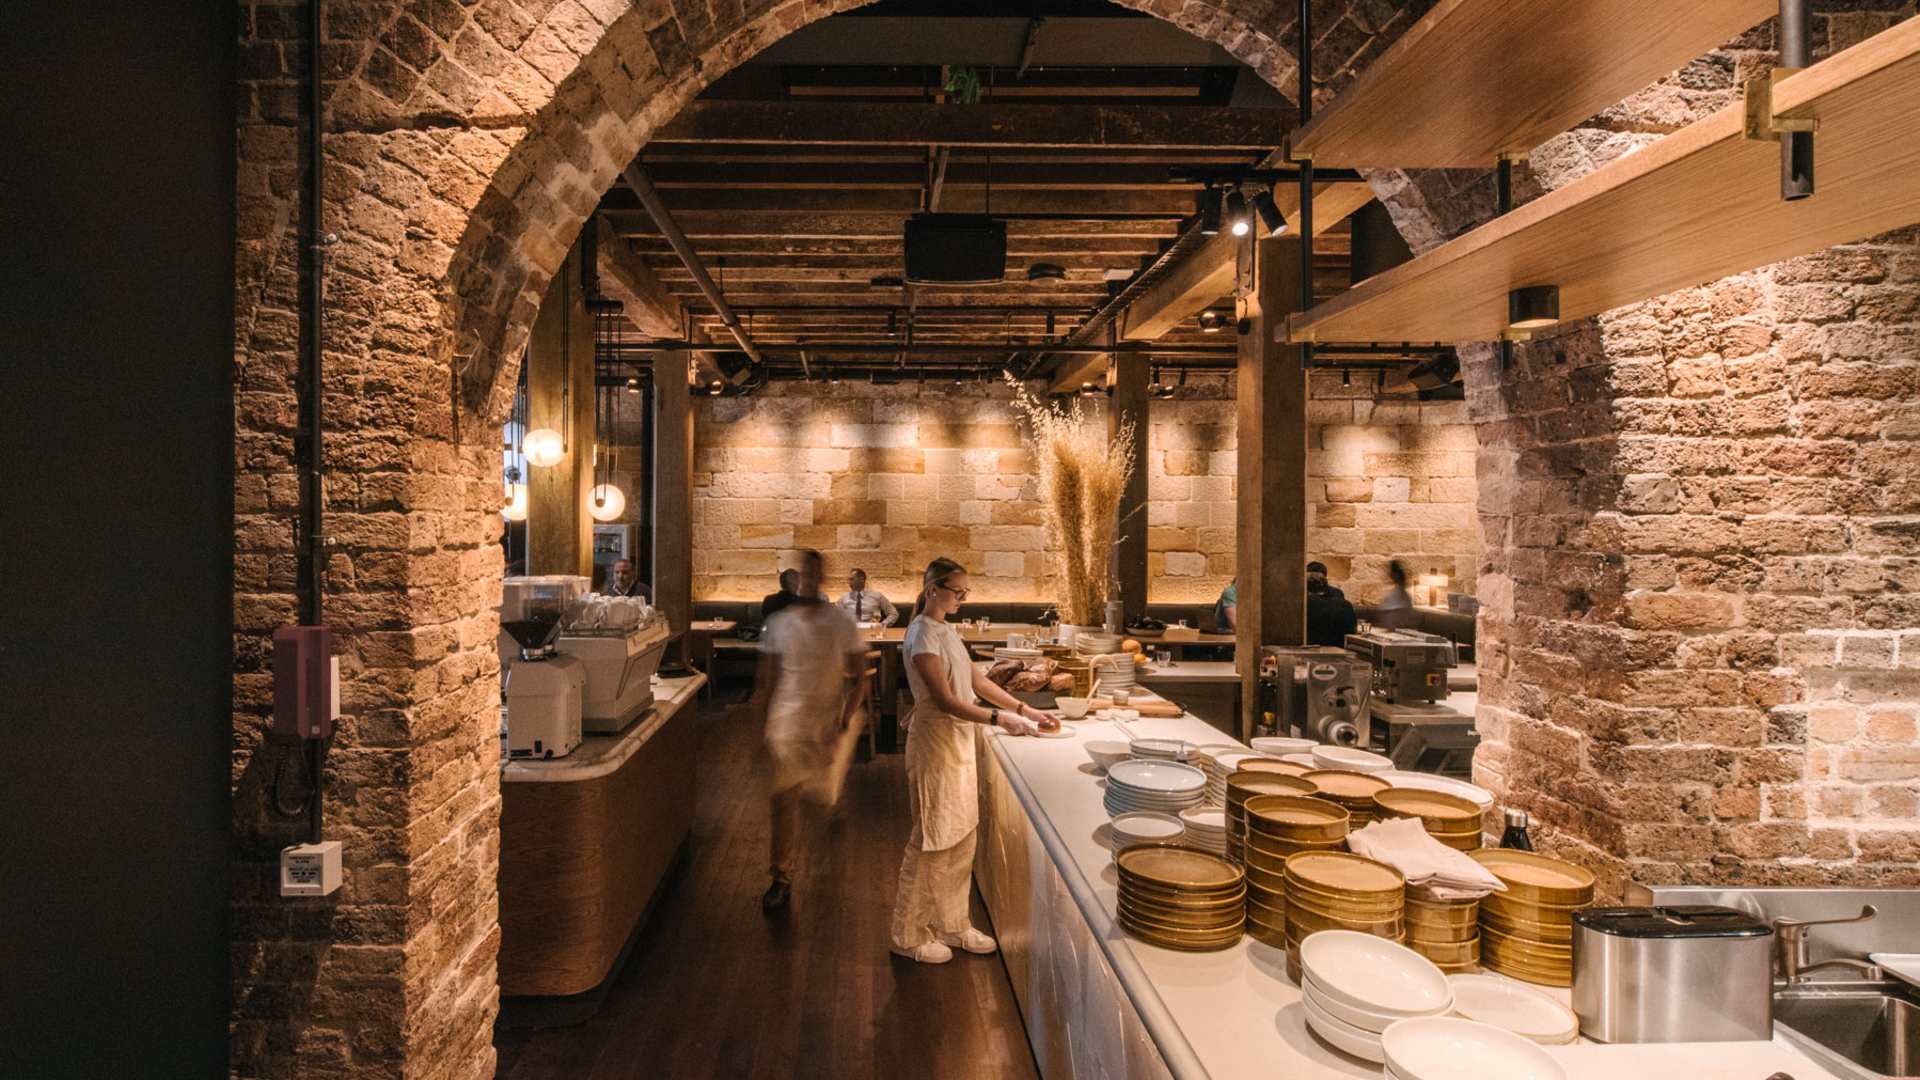 Grana - one of the best Italian restaurants in Sydney.